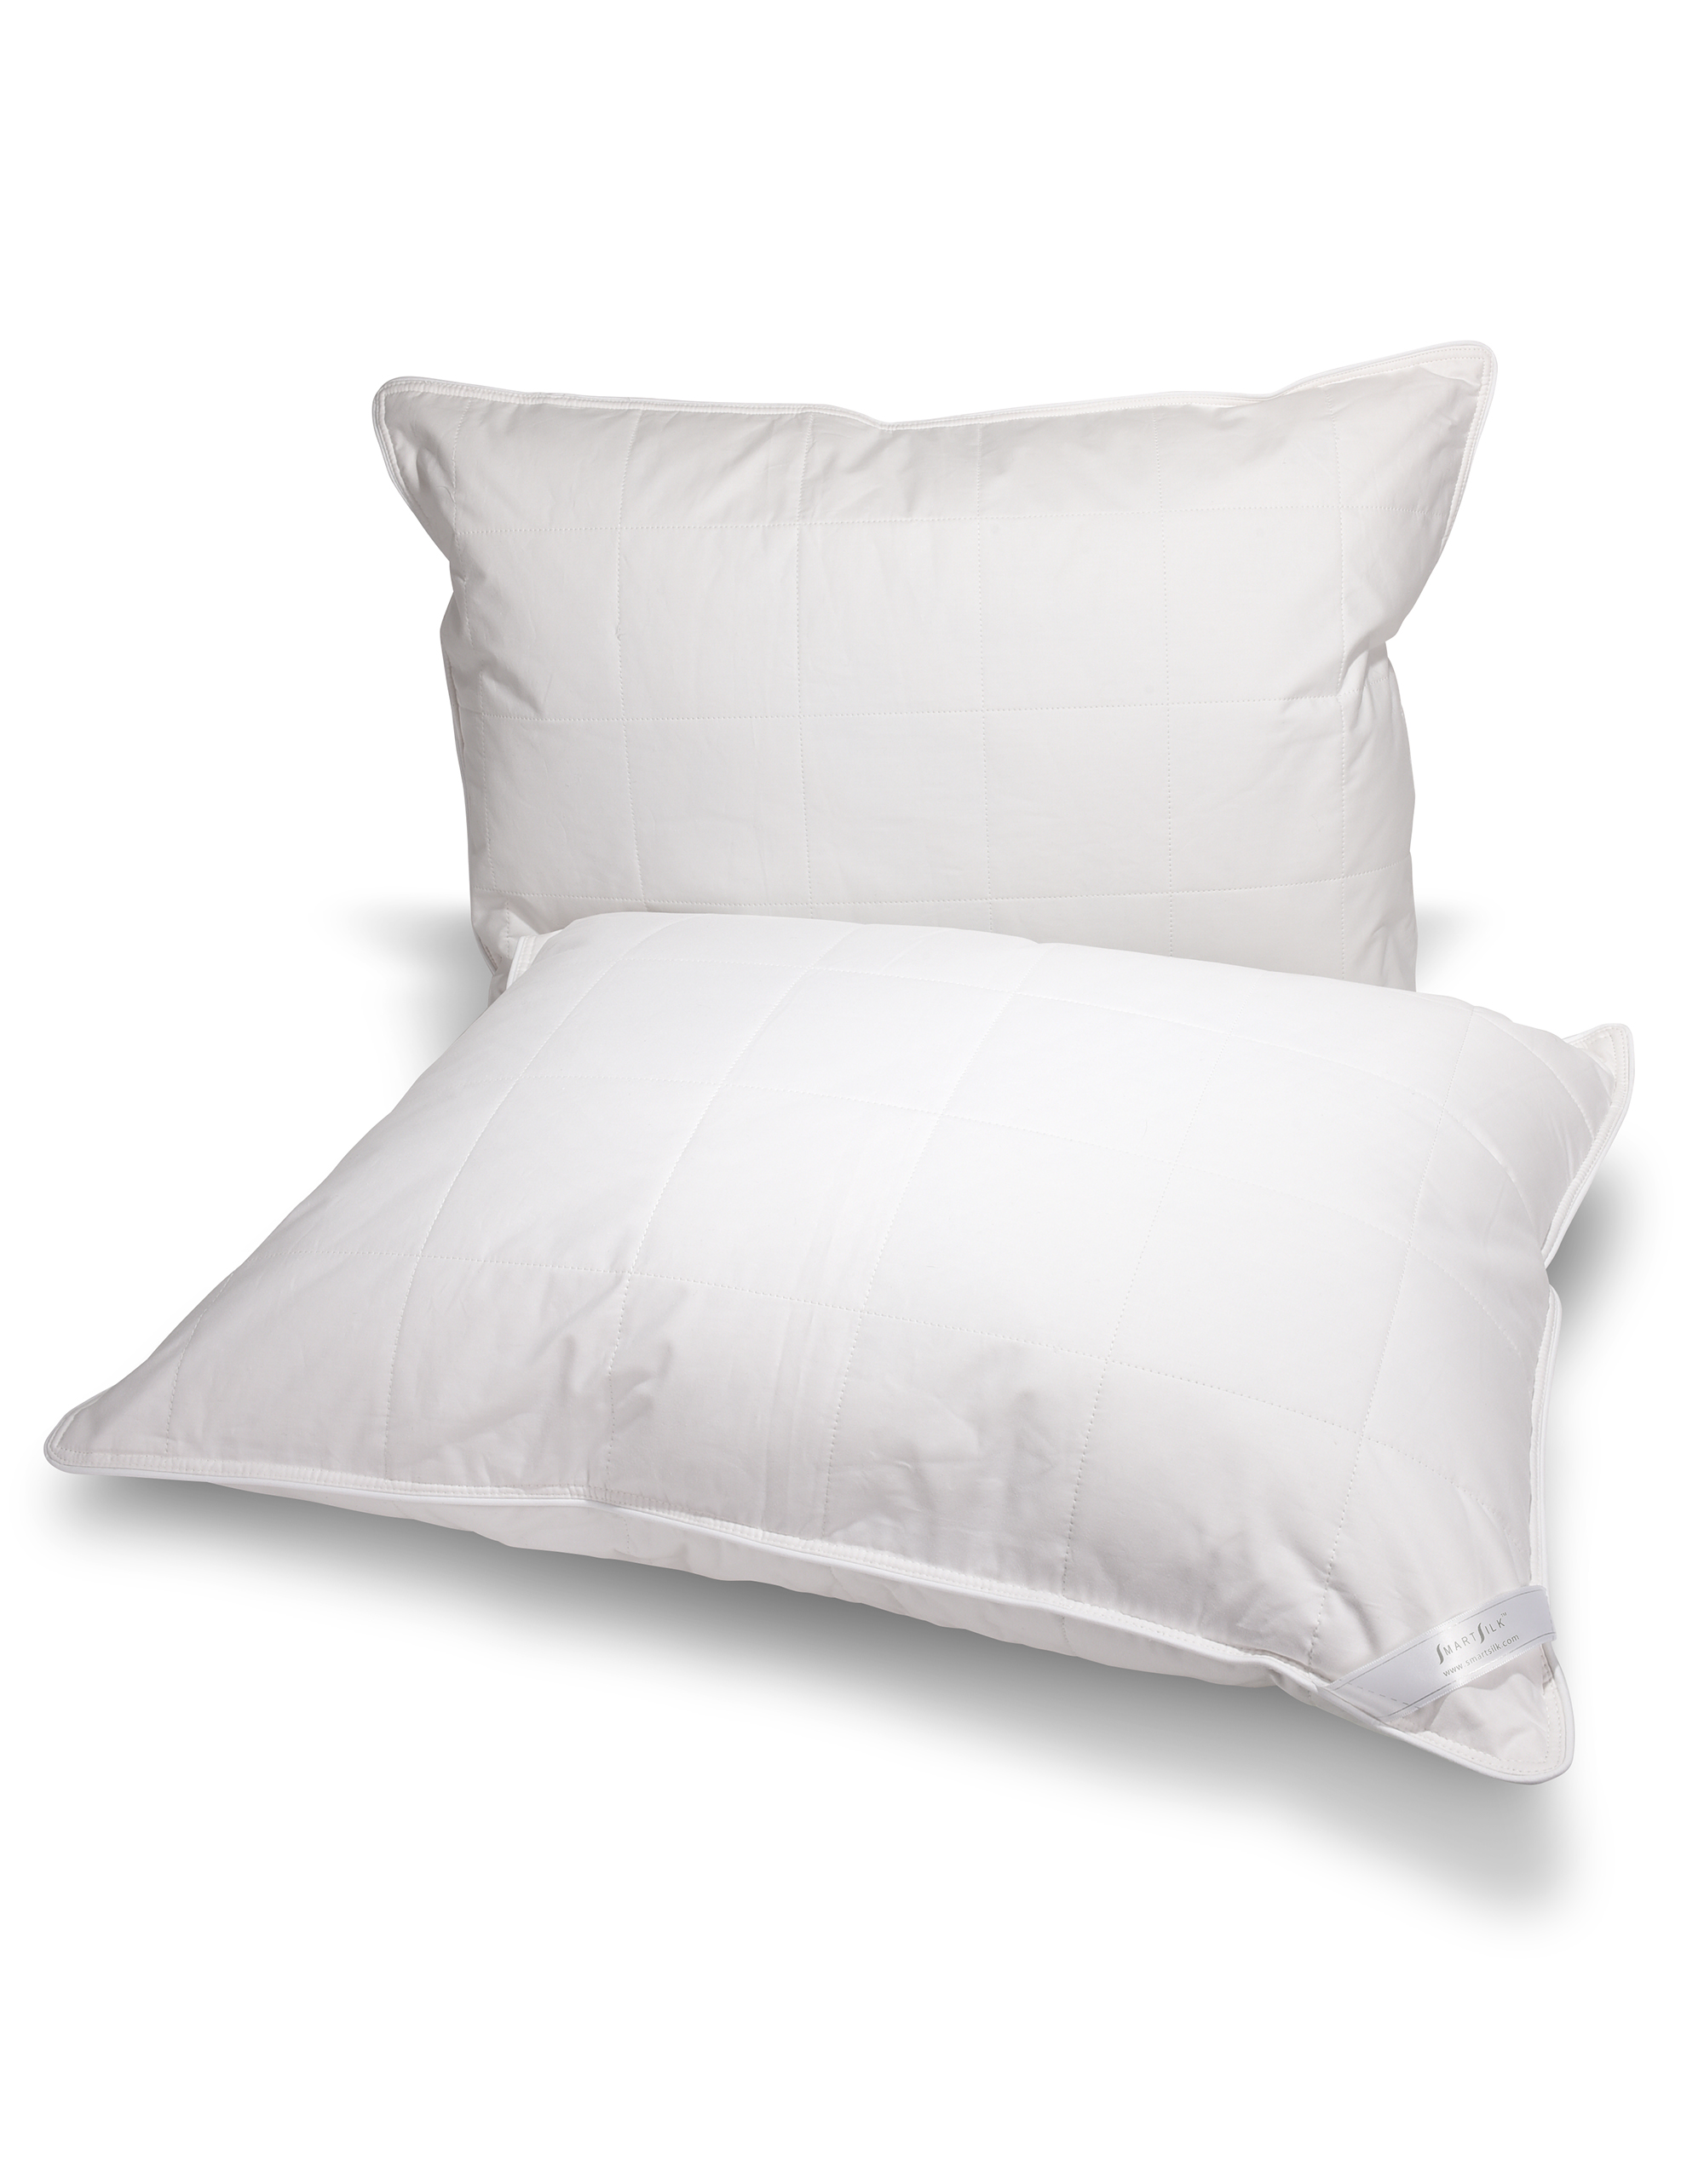 64132-l2 Pillow Comfort Level 2 - King